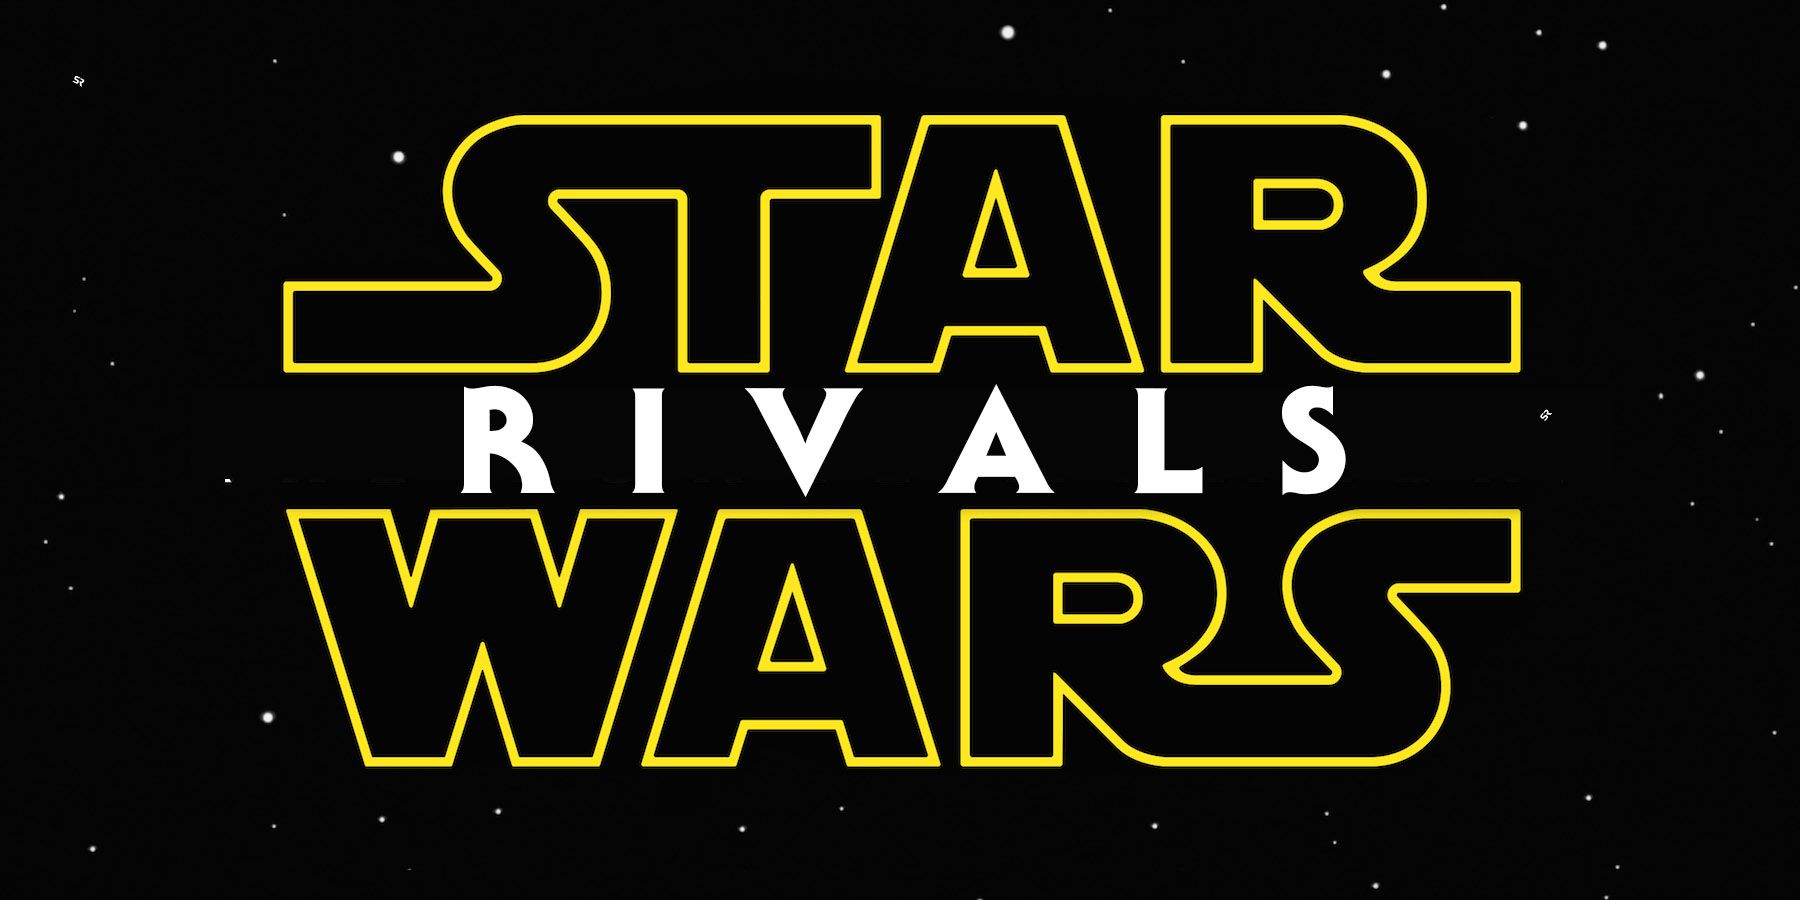 Star Wars Rivals Fan Logo by Rob Keyes